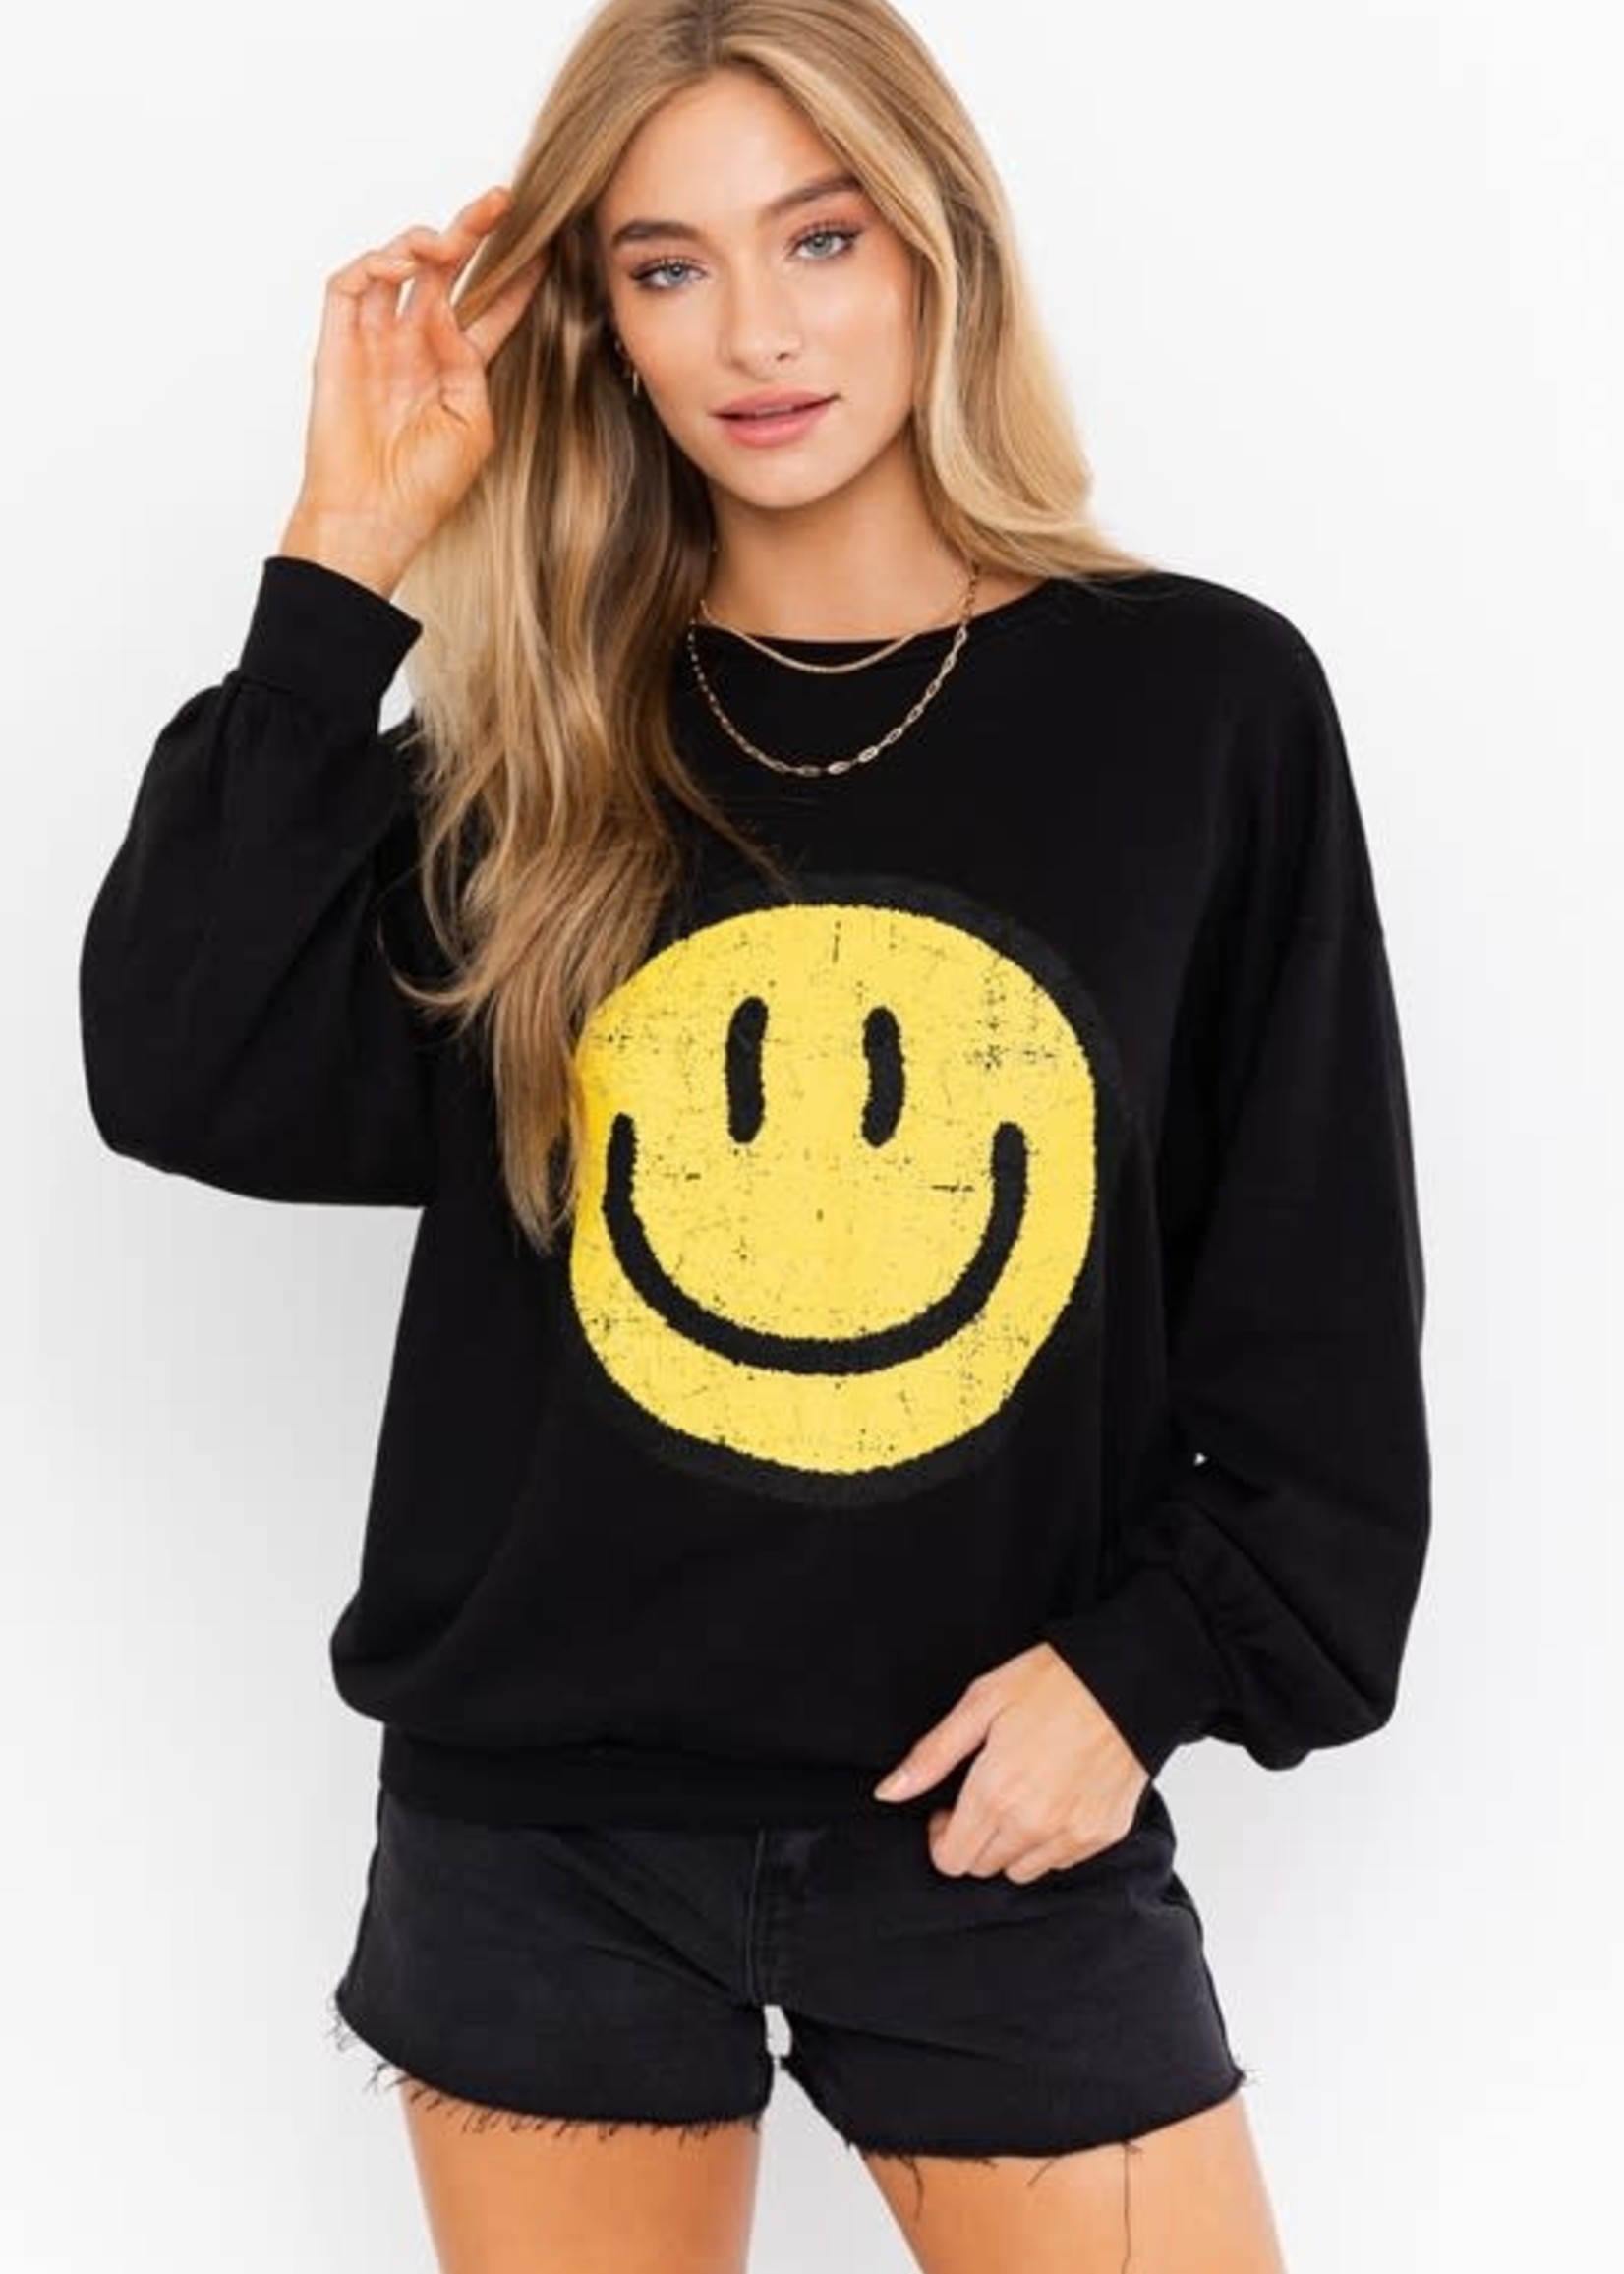 You Make Me Smile Black Sweatshirt